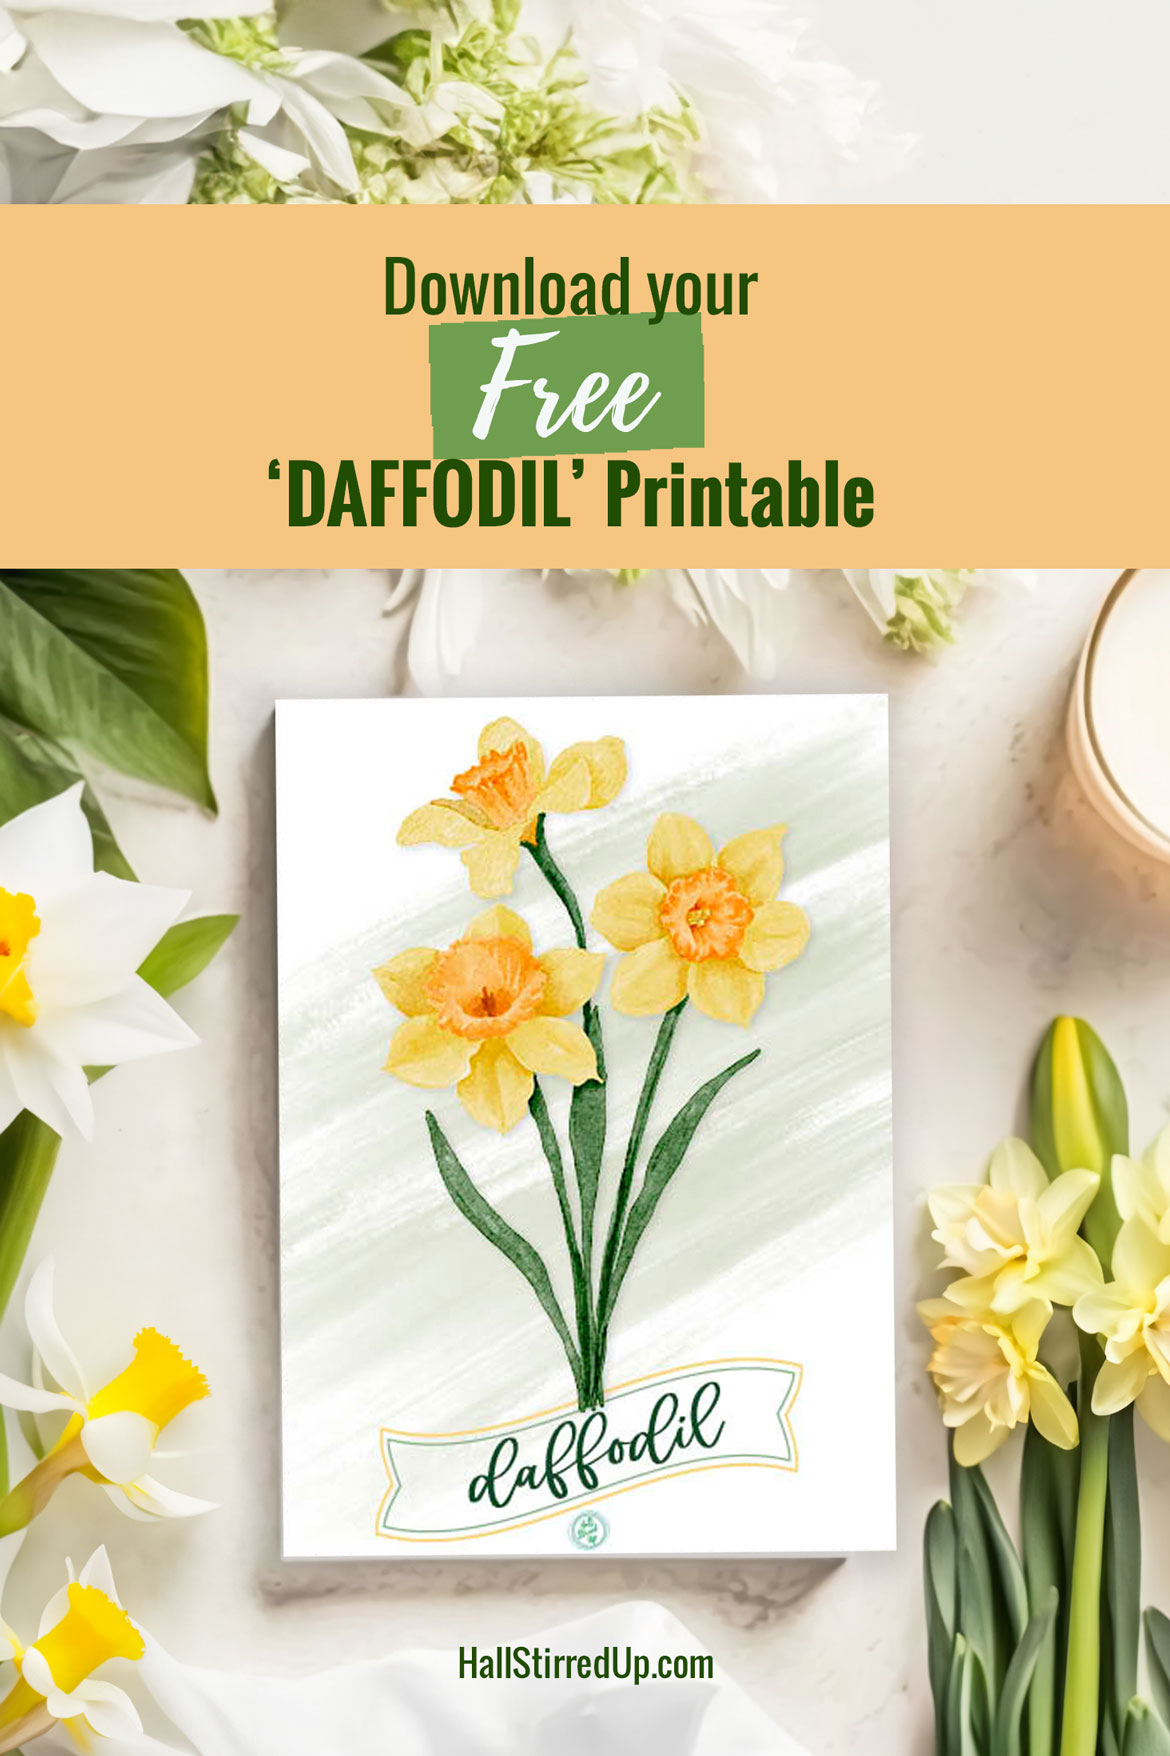 I love Daffodils Includes free printable